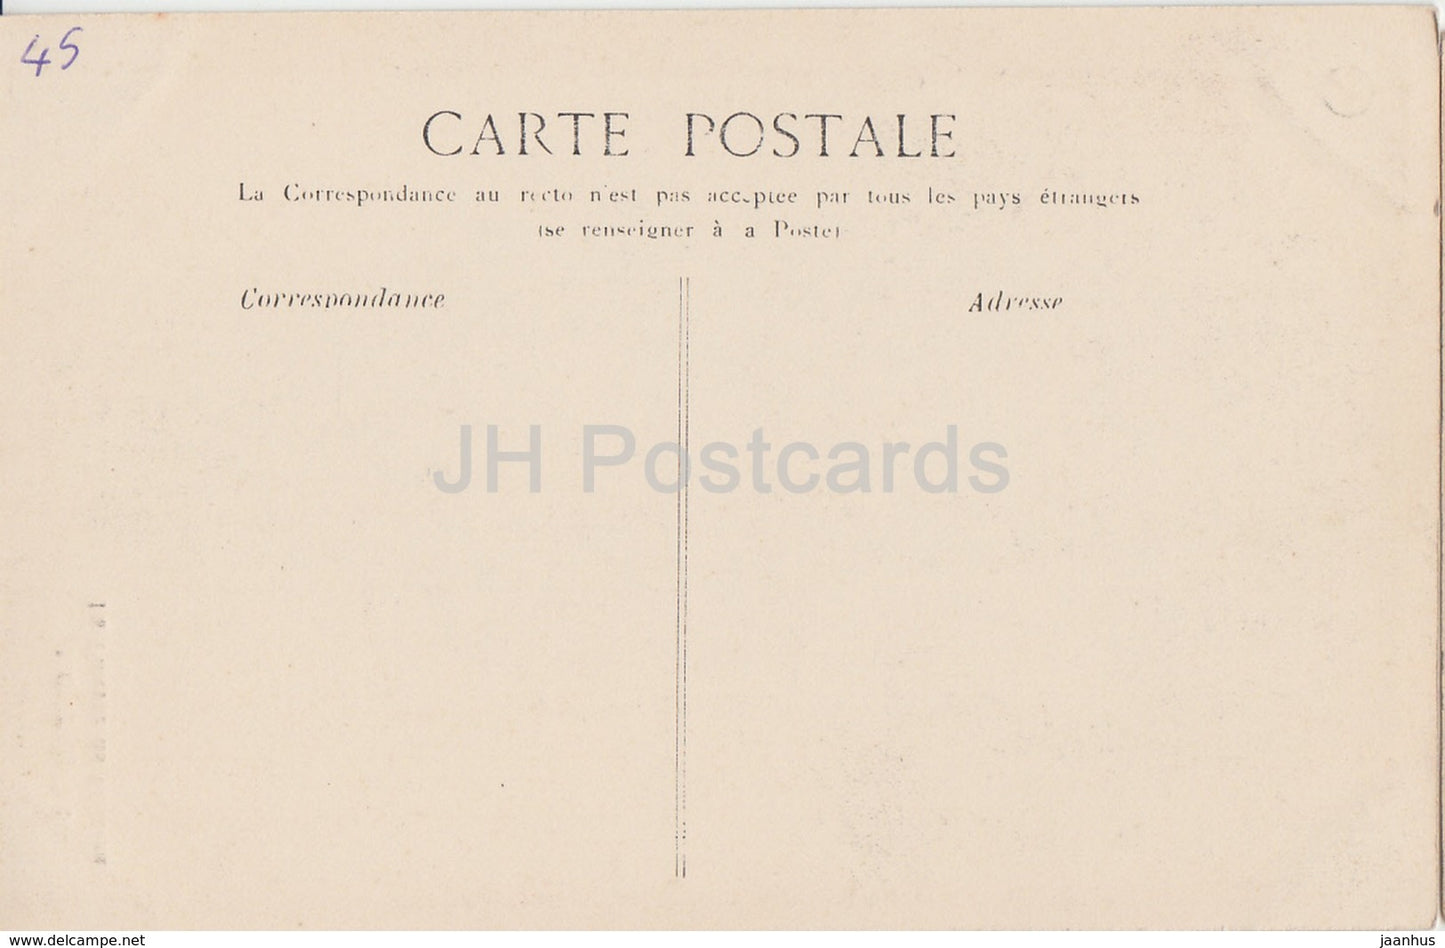 Montargis - La Poterne du Chateau - castle - old postcard - France - unused